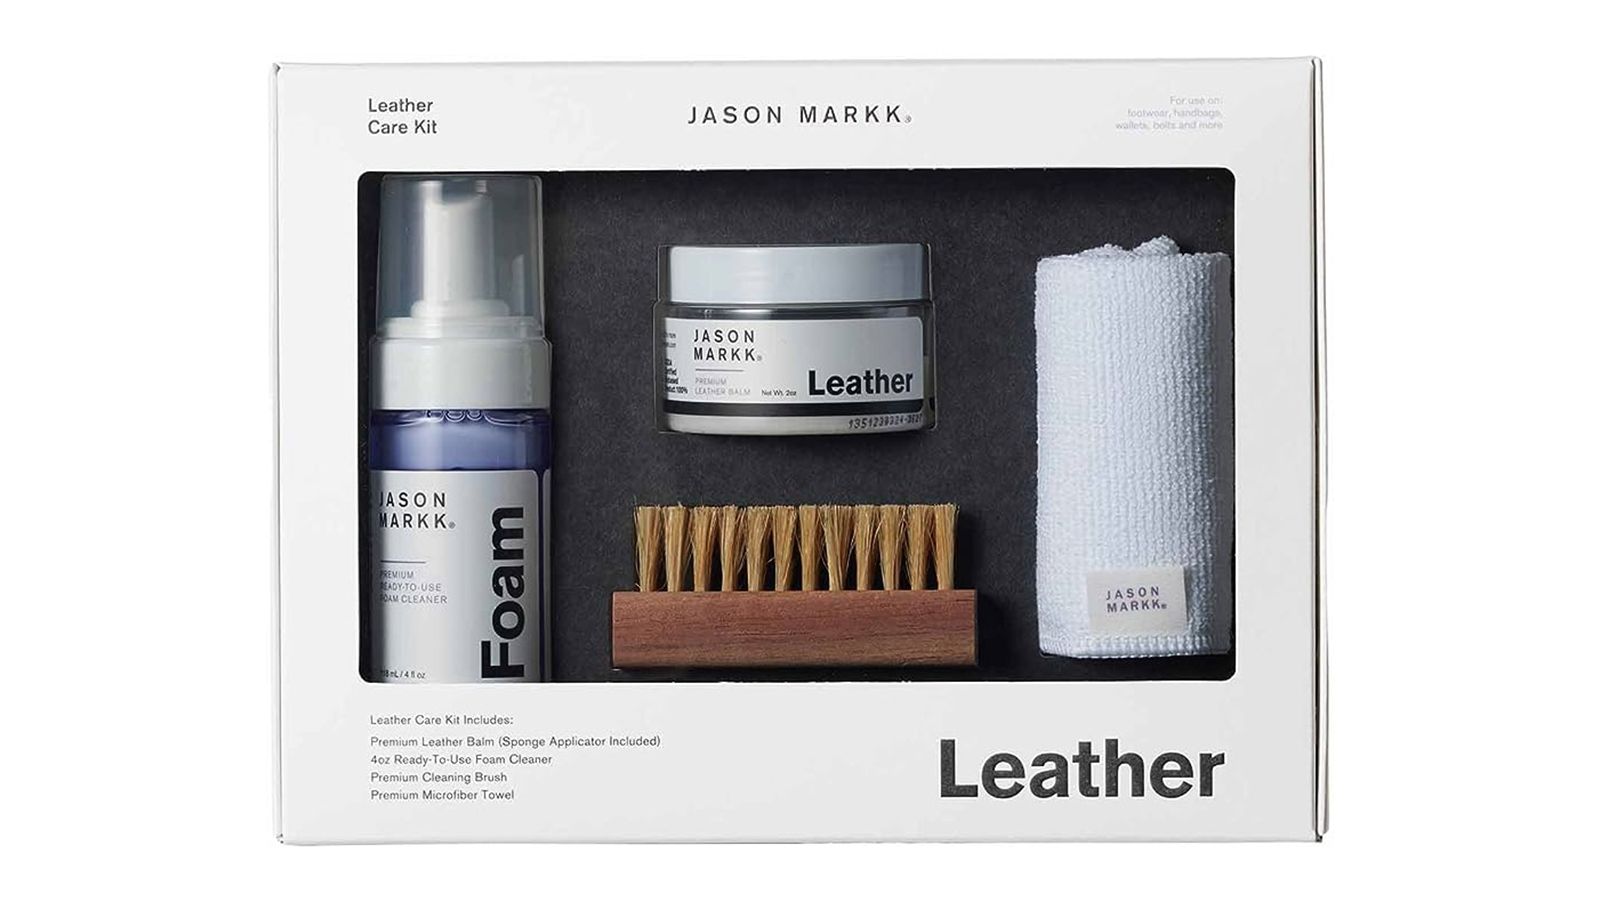 https://media.cnn.com/api/v1/images/stellar/prod/jason-markk-leather-care-kit-cnnu.jpg?c=original